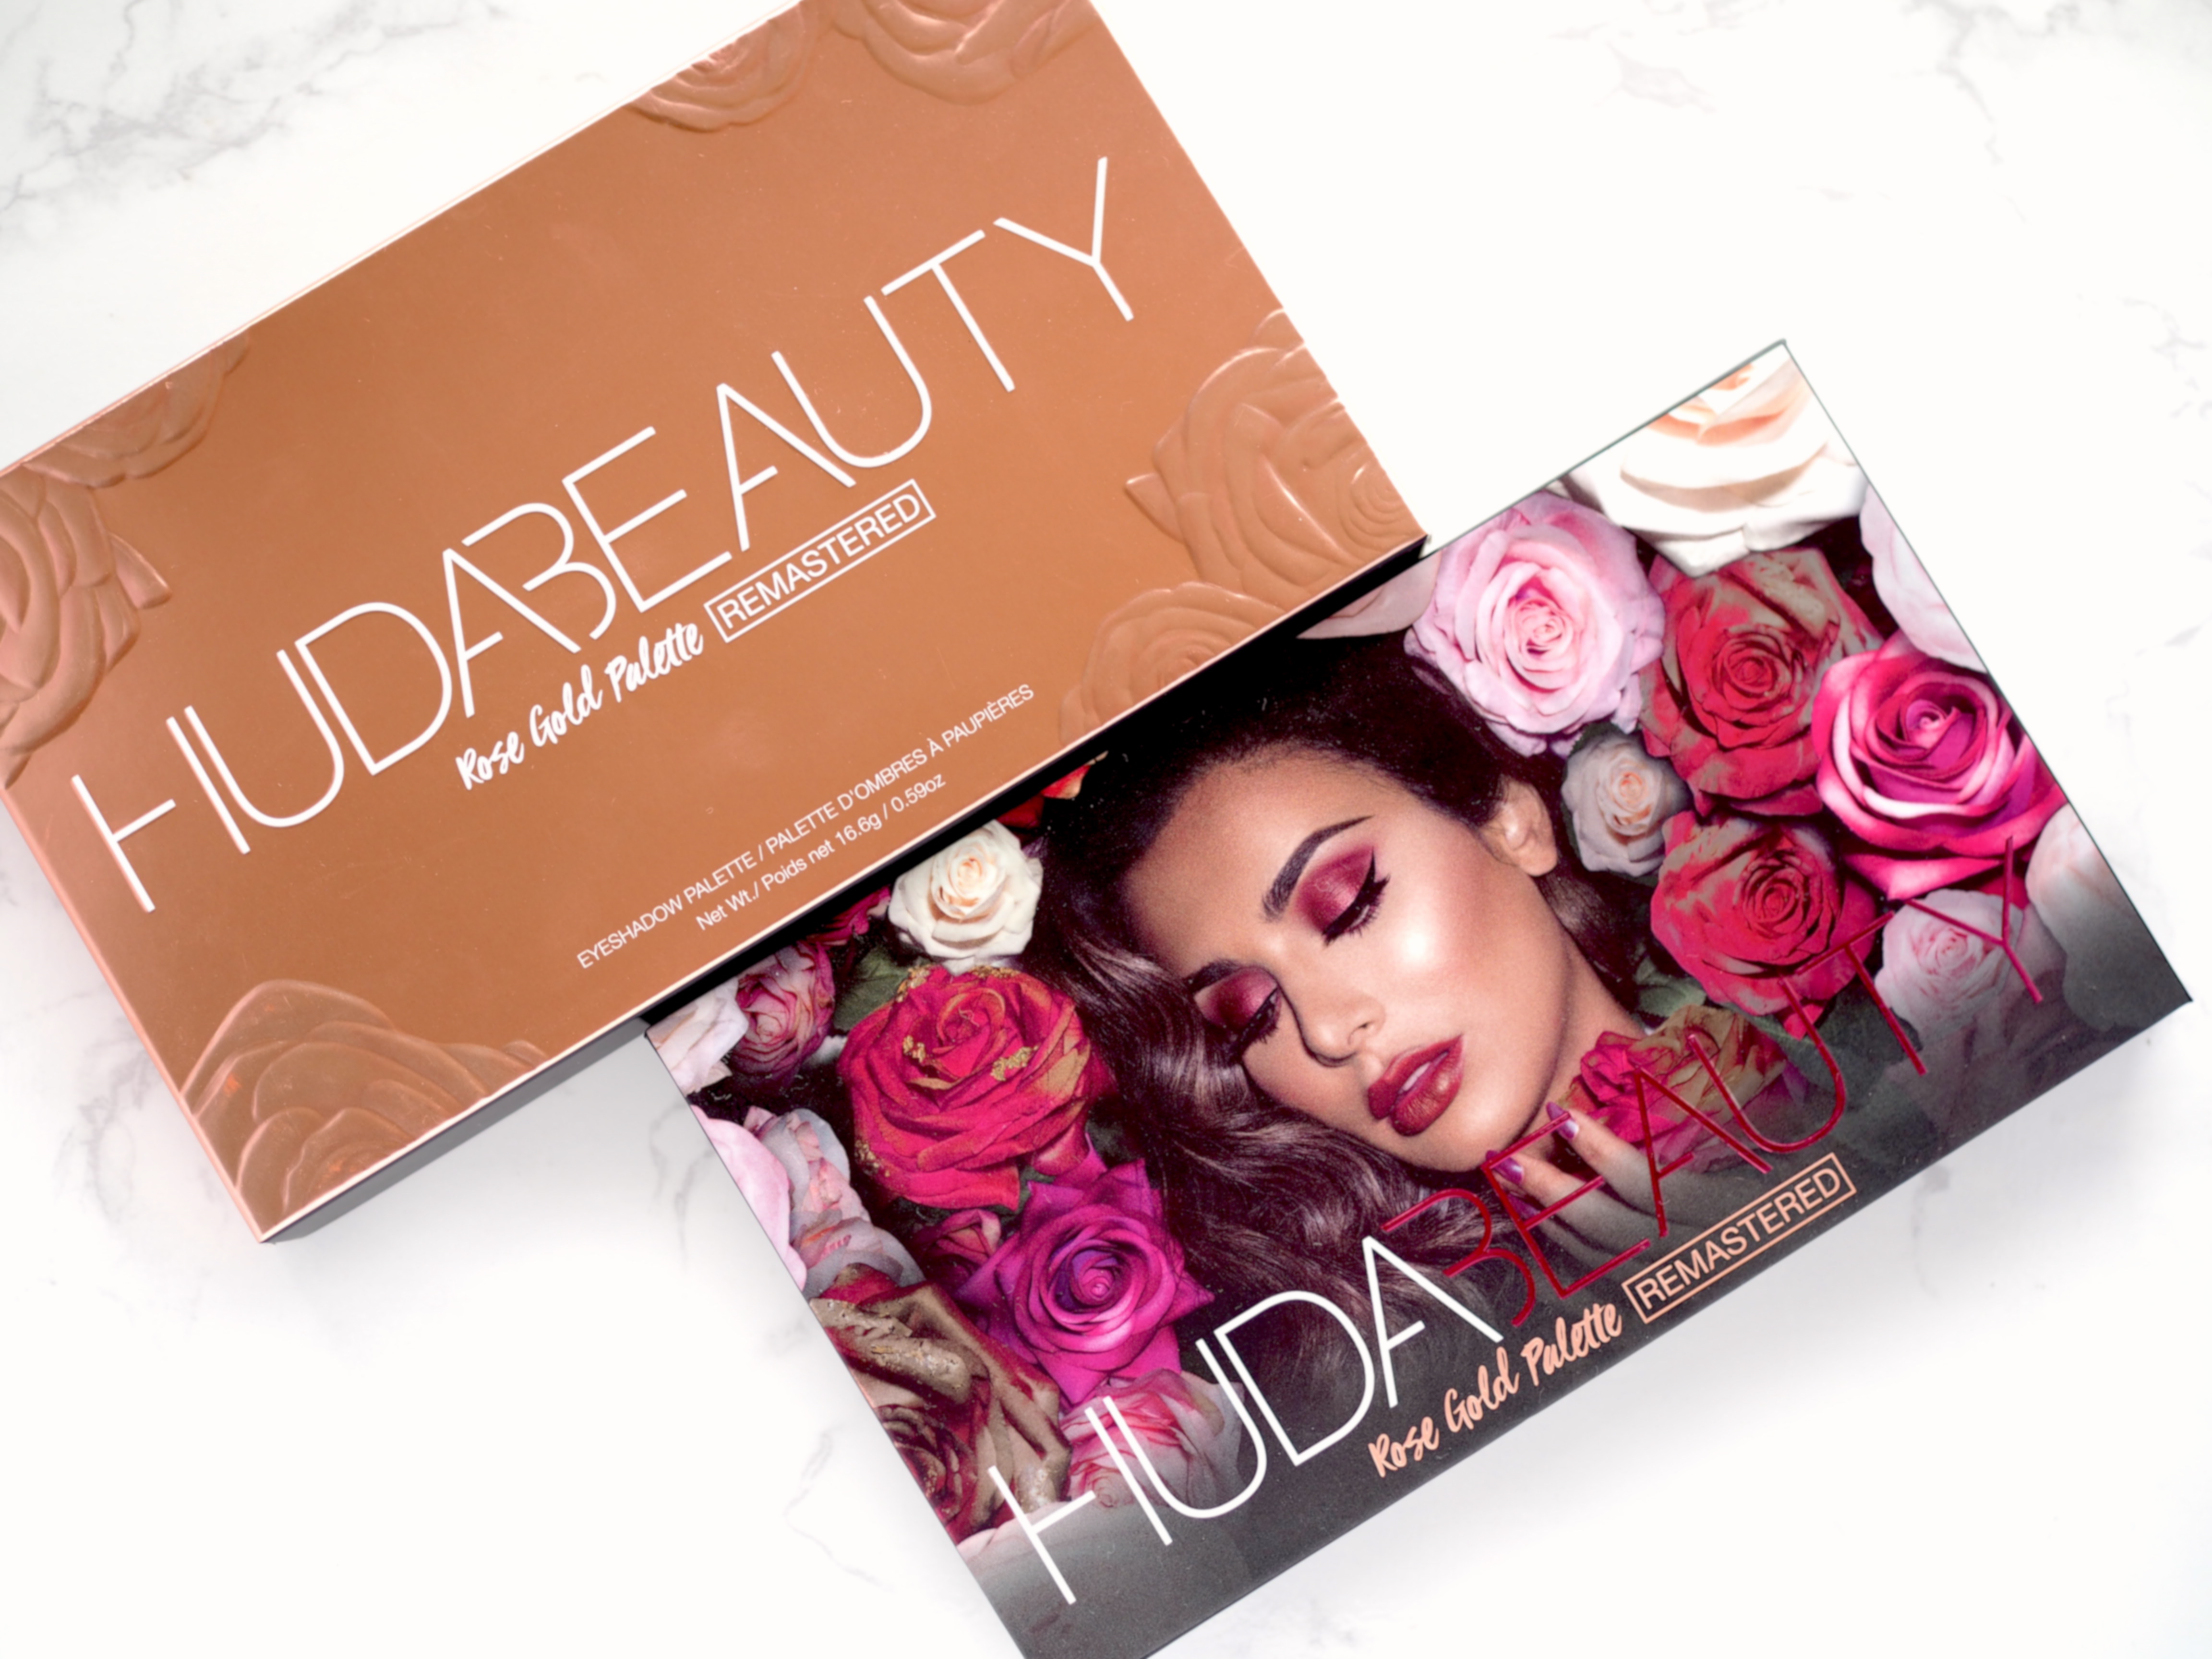 Huda Beautyのリマスター版Rose Goldアイシャドウパレットレビュー 